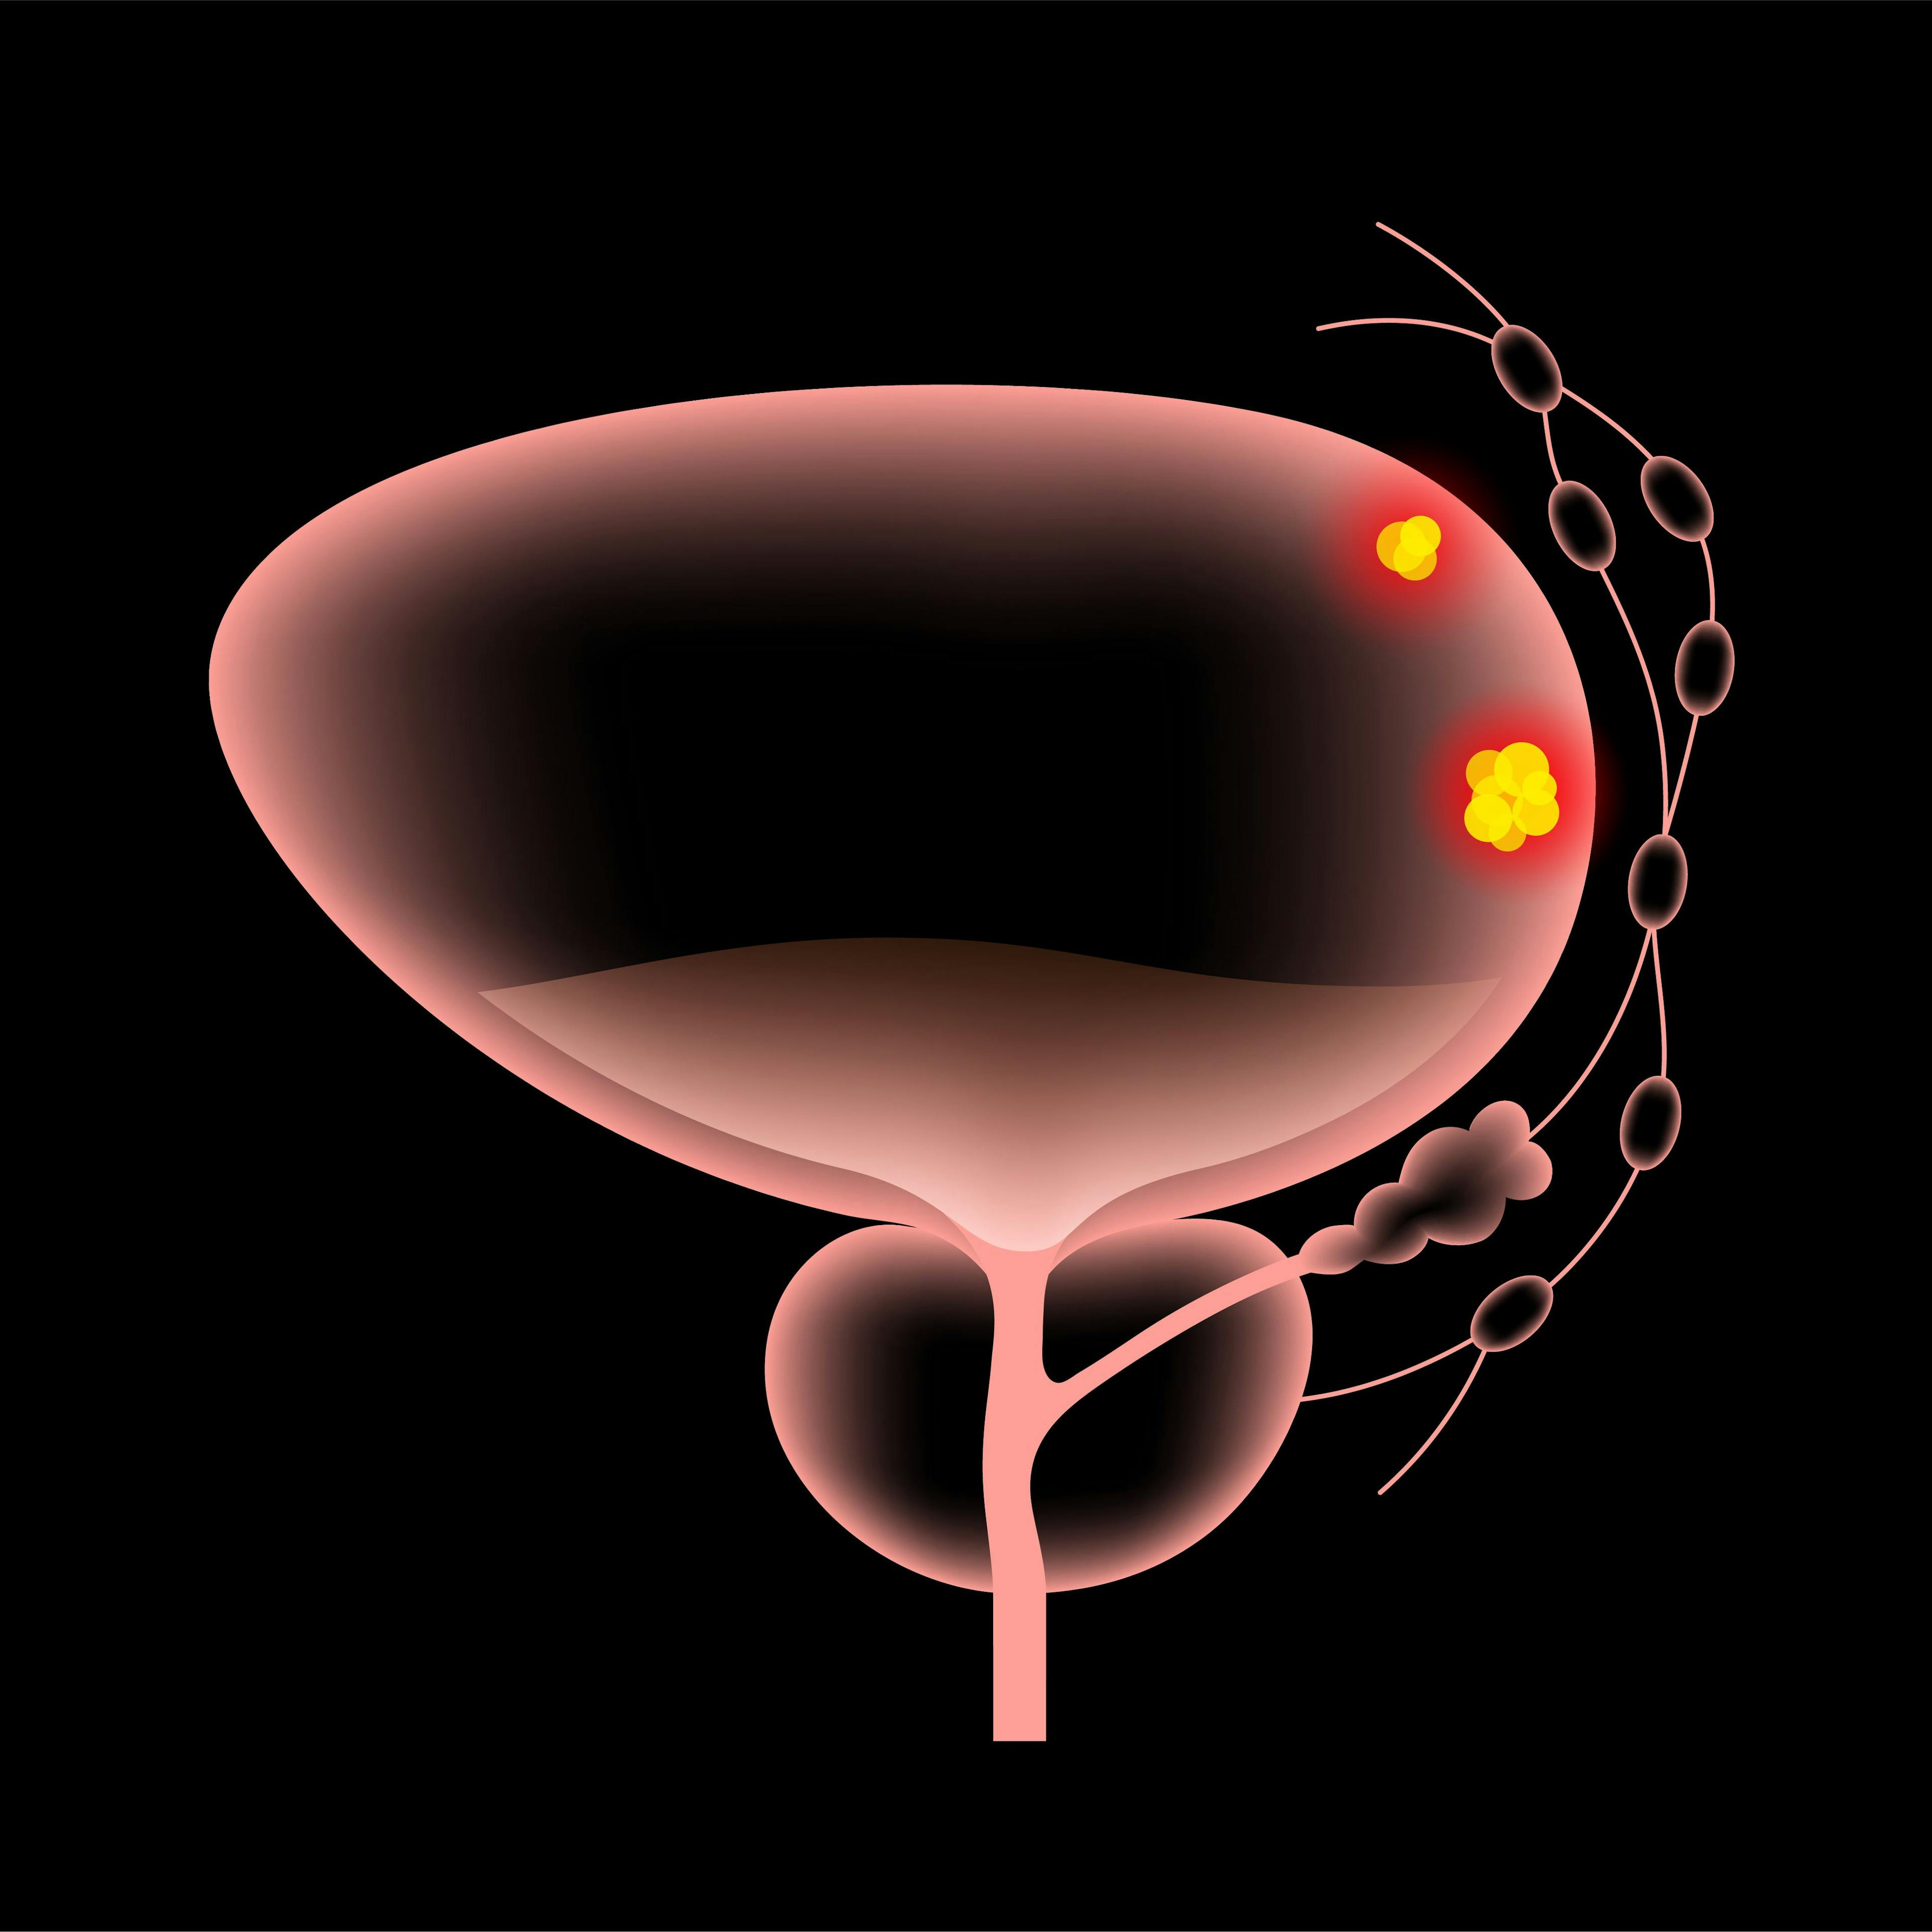 3D illustration of bladder cancer: © pikovit - stock.adobe.com